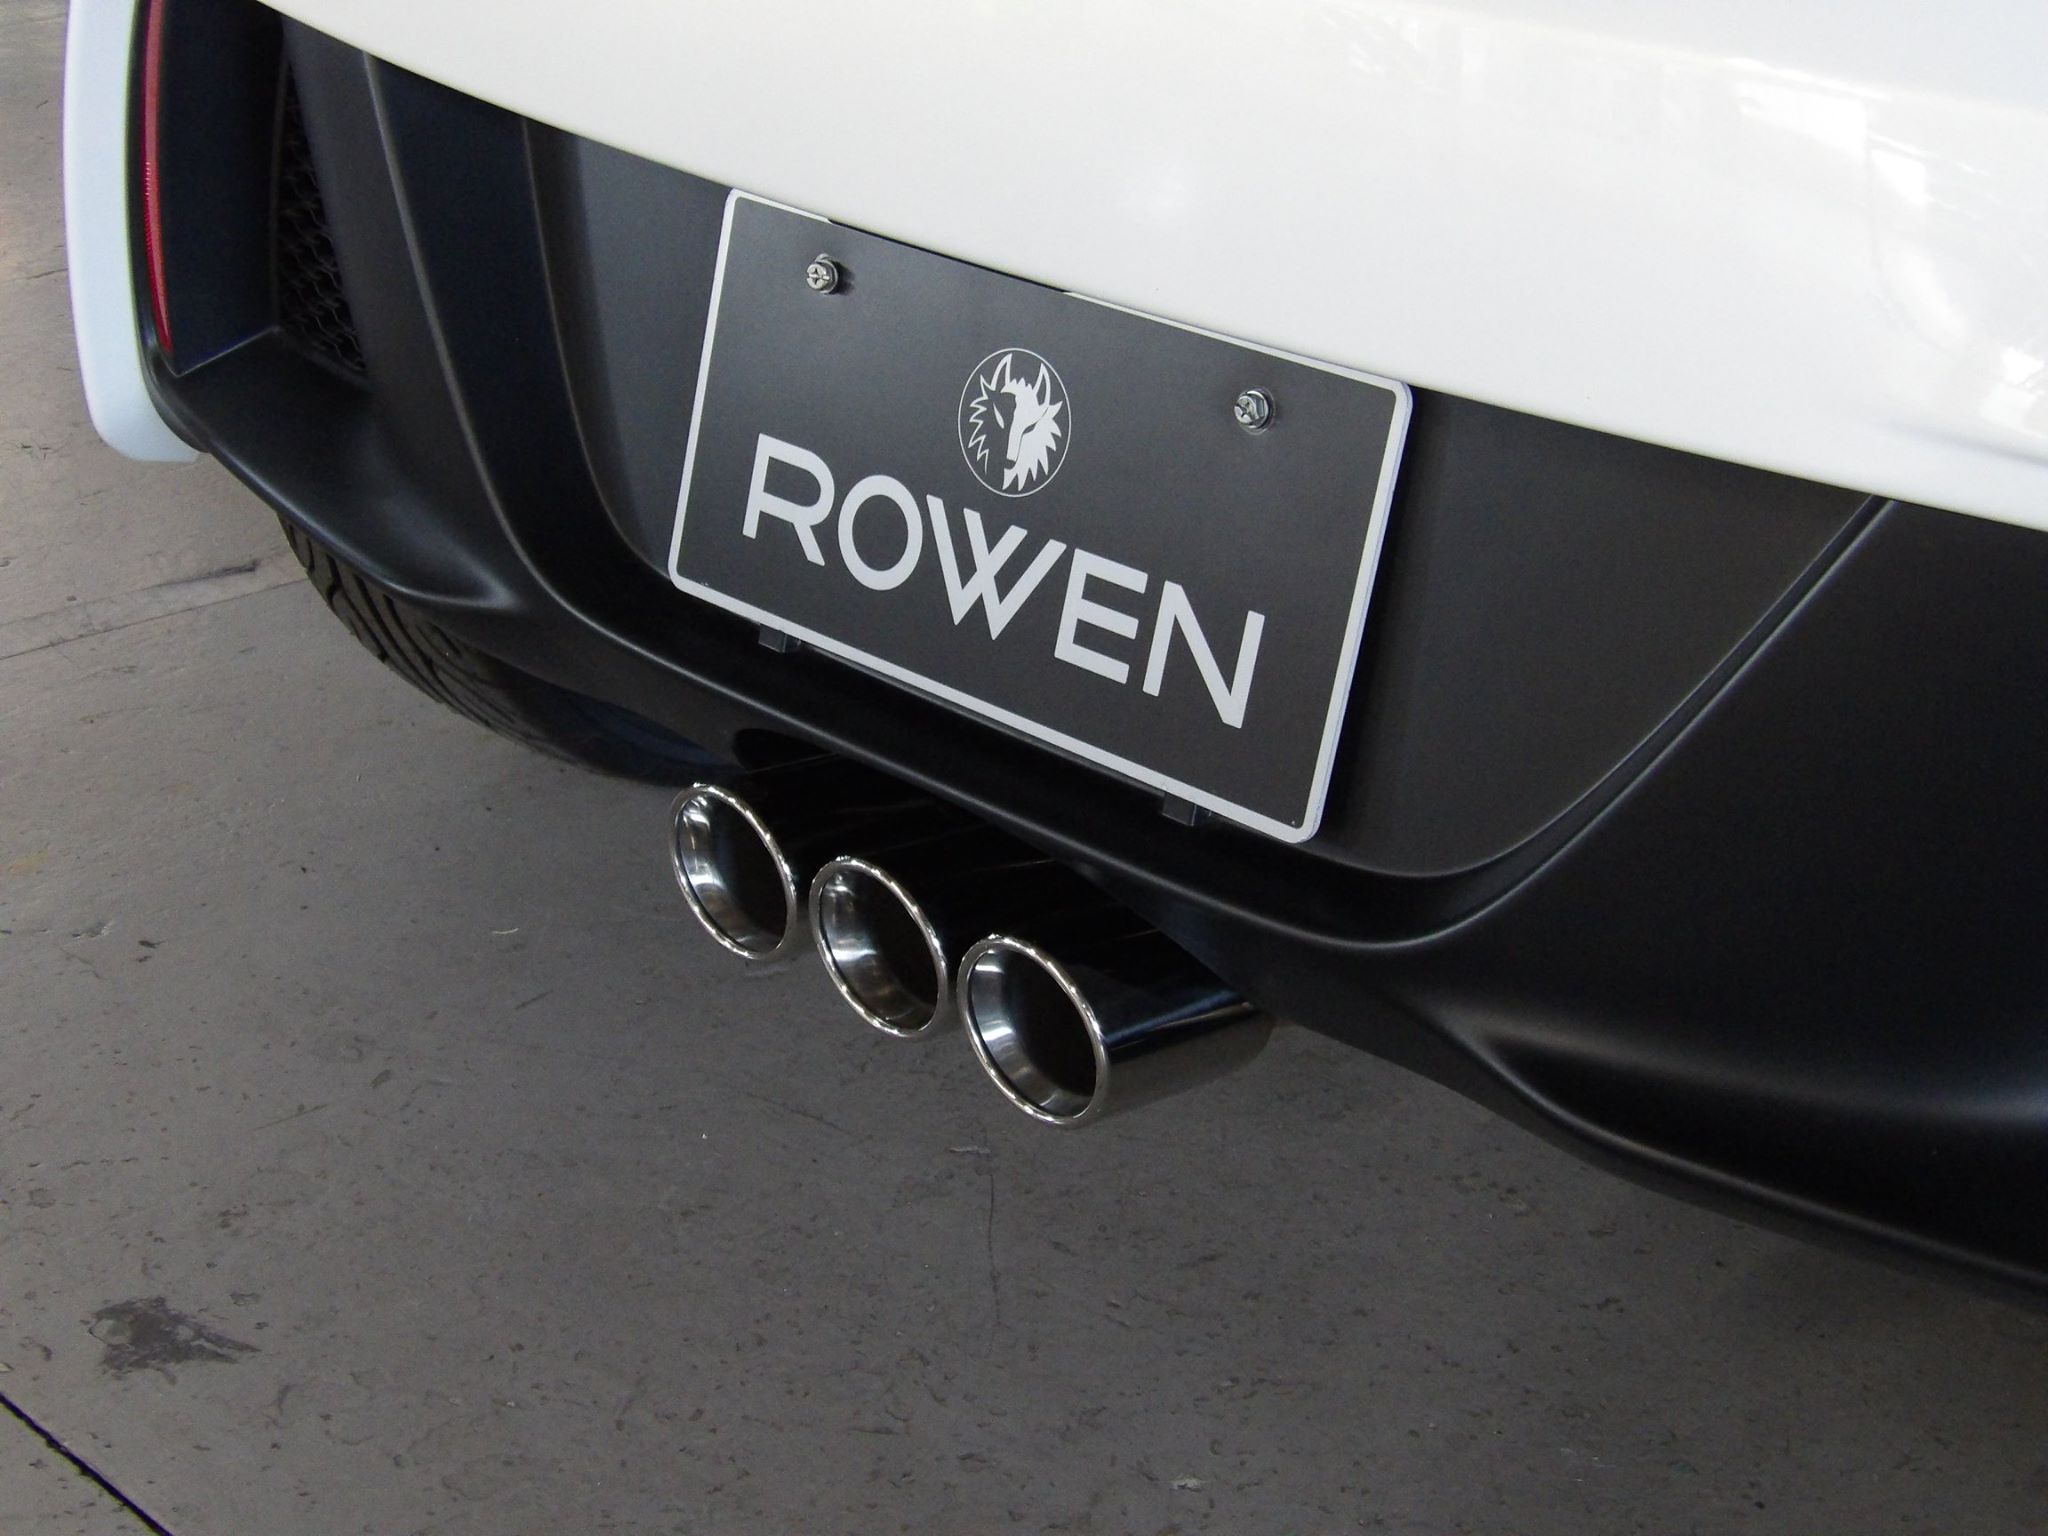 Honda S660 Copies Civic Type R Triple Exhaust In Rowen Tuning Autoevolution